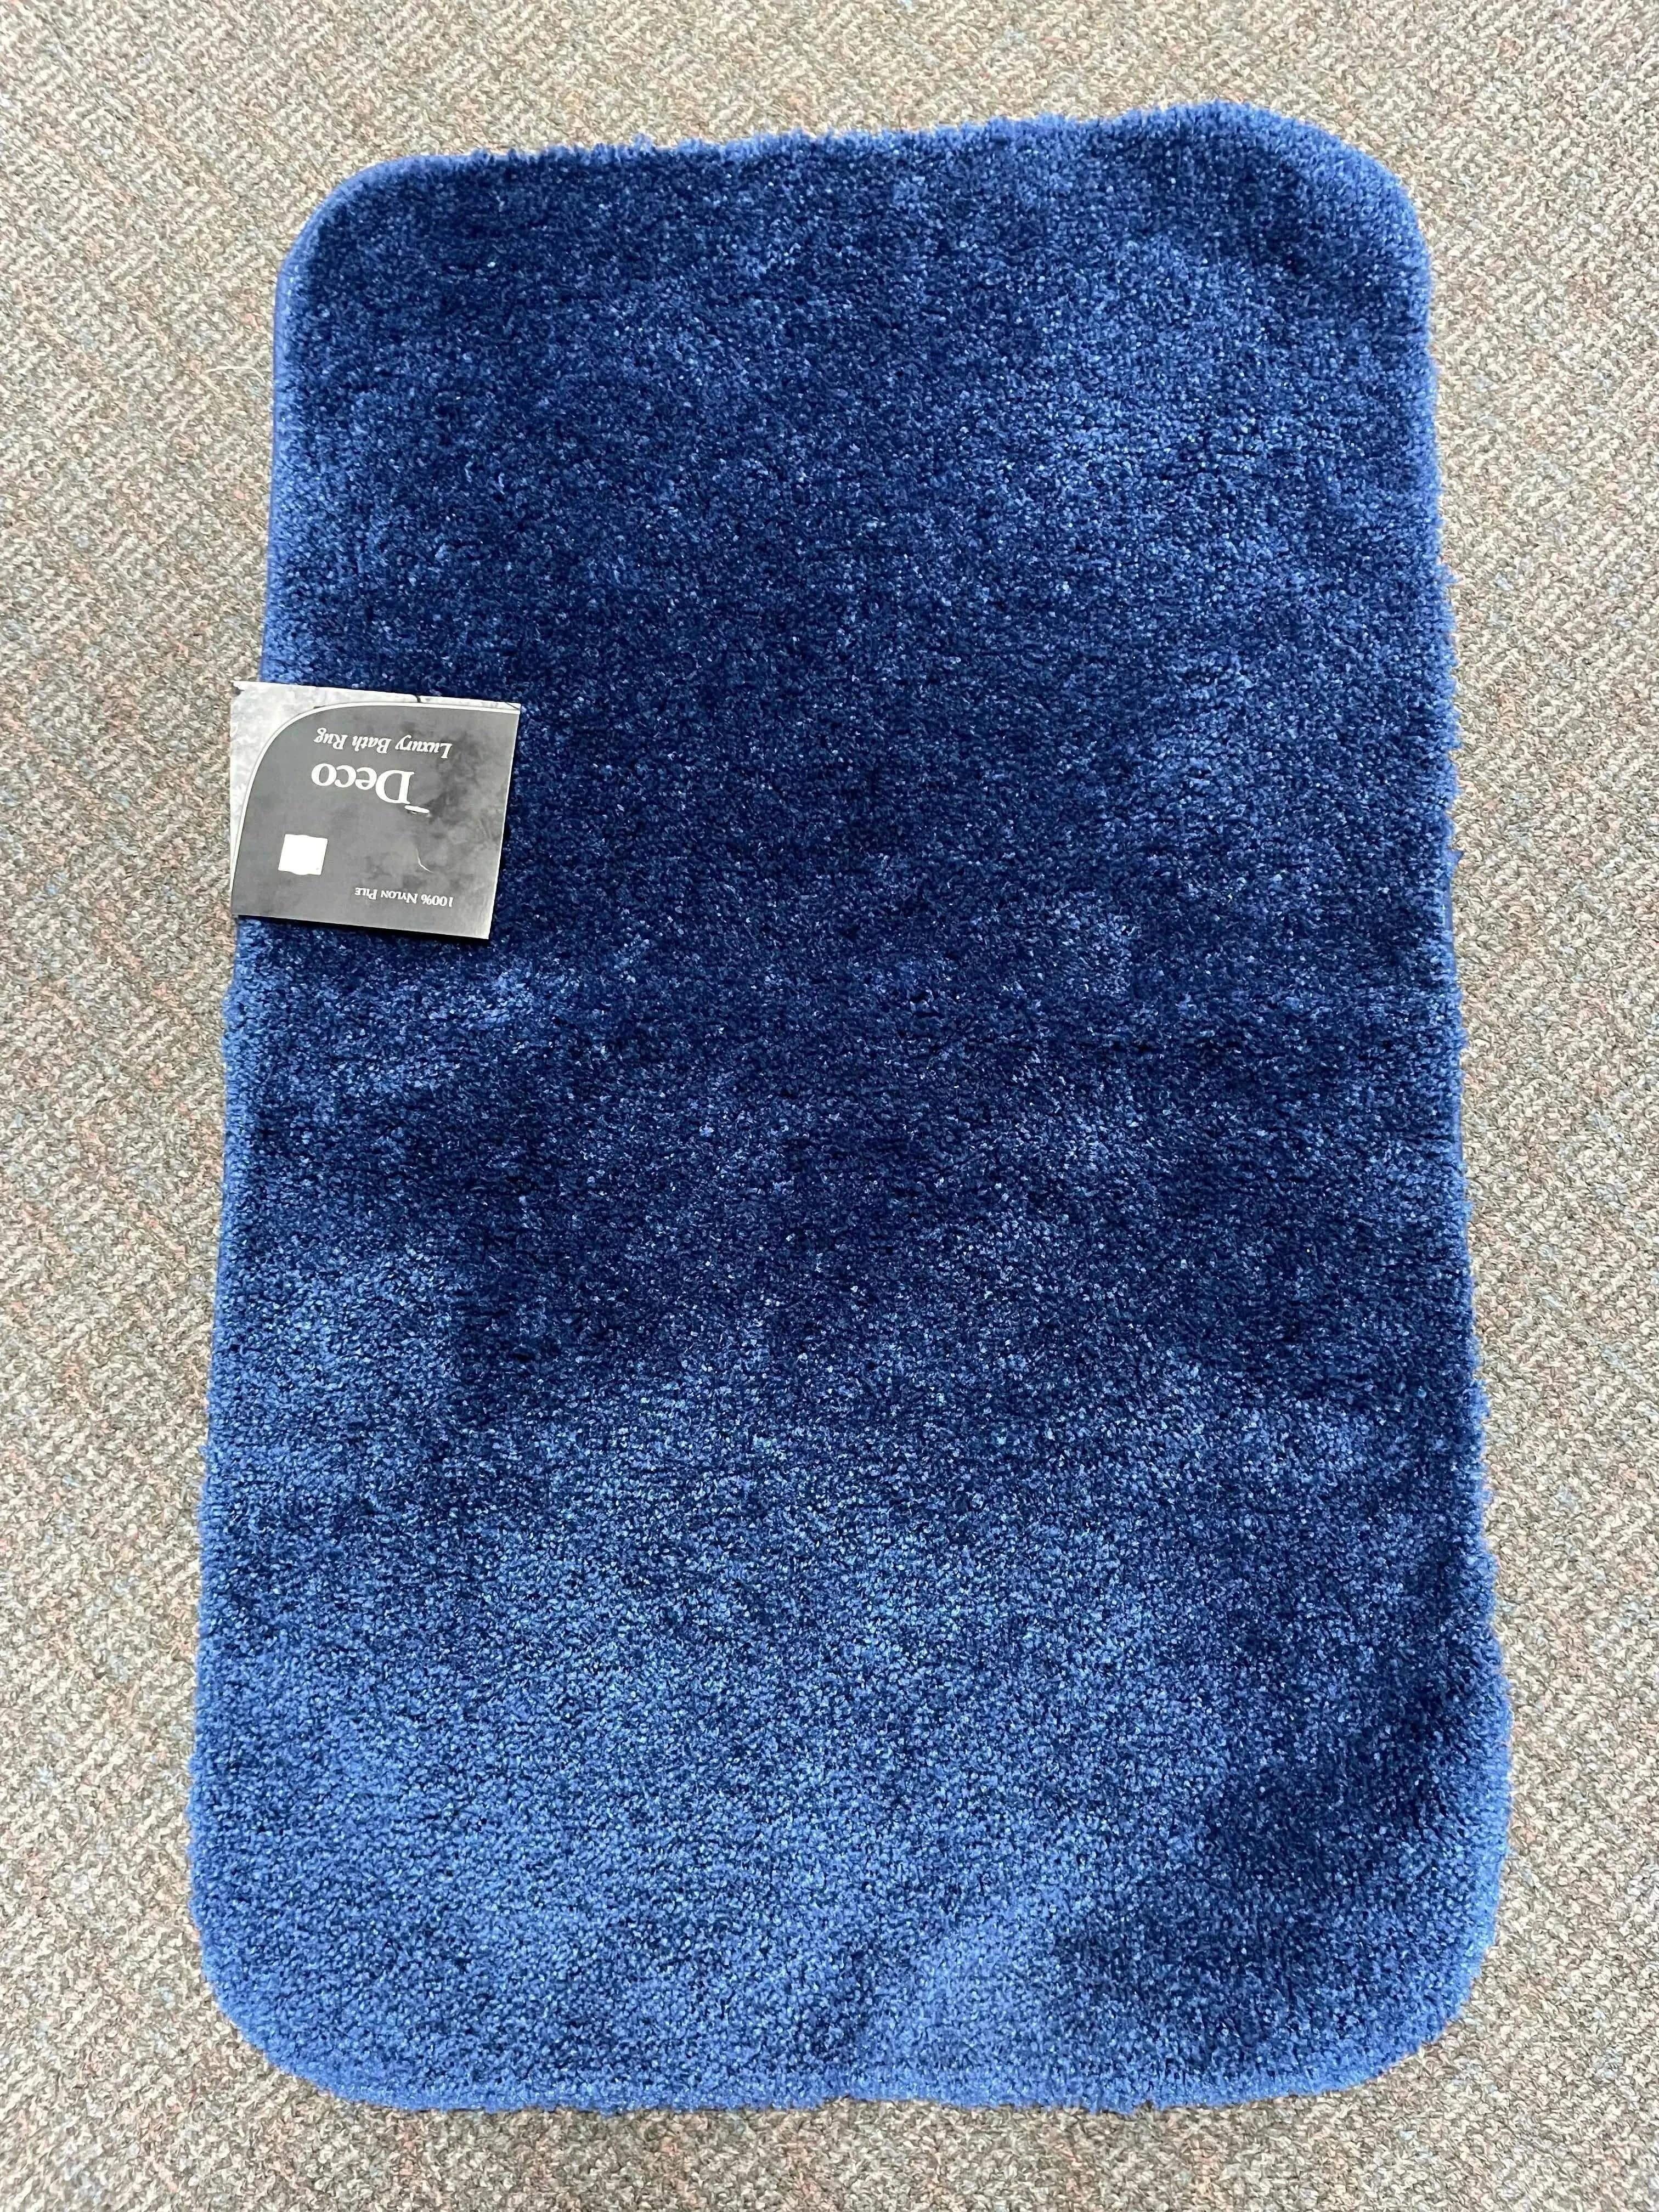 Linen World bathroom rugs Navy / 21x34 Thick bathroom rugs